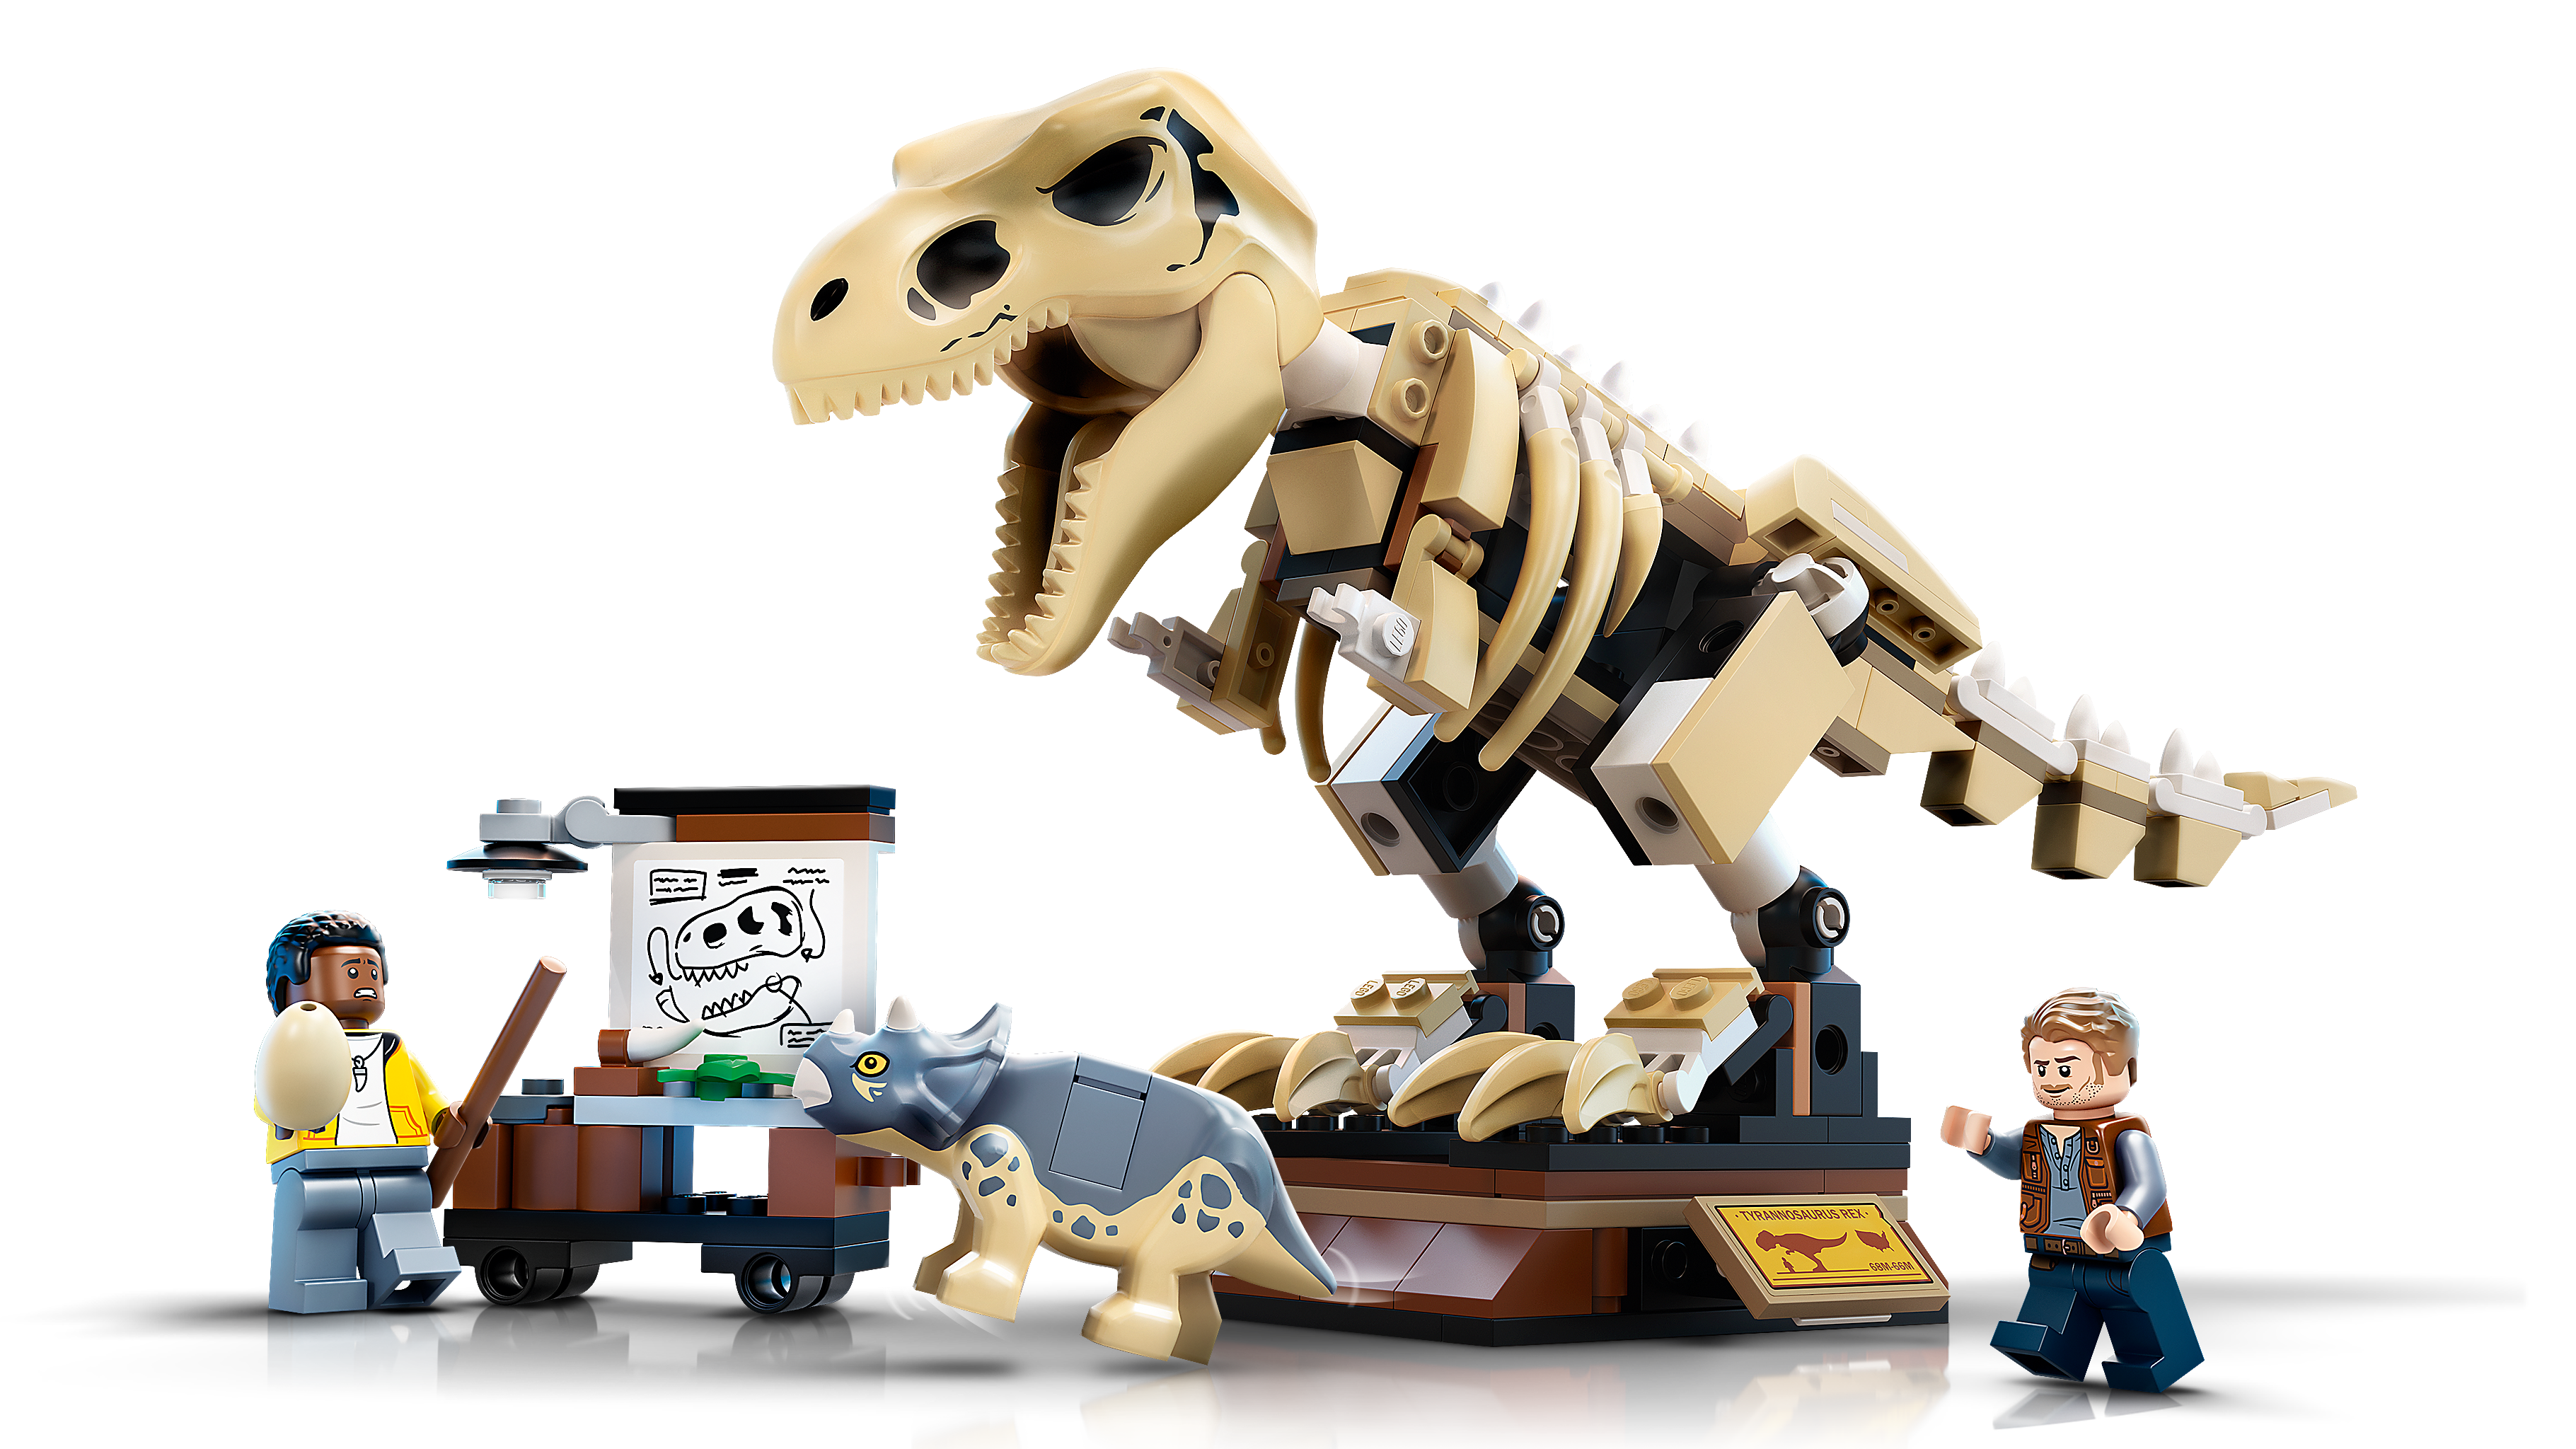 T. rex Dinosaur Fossil Exhibition